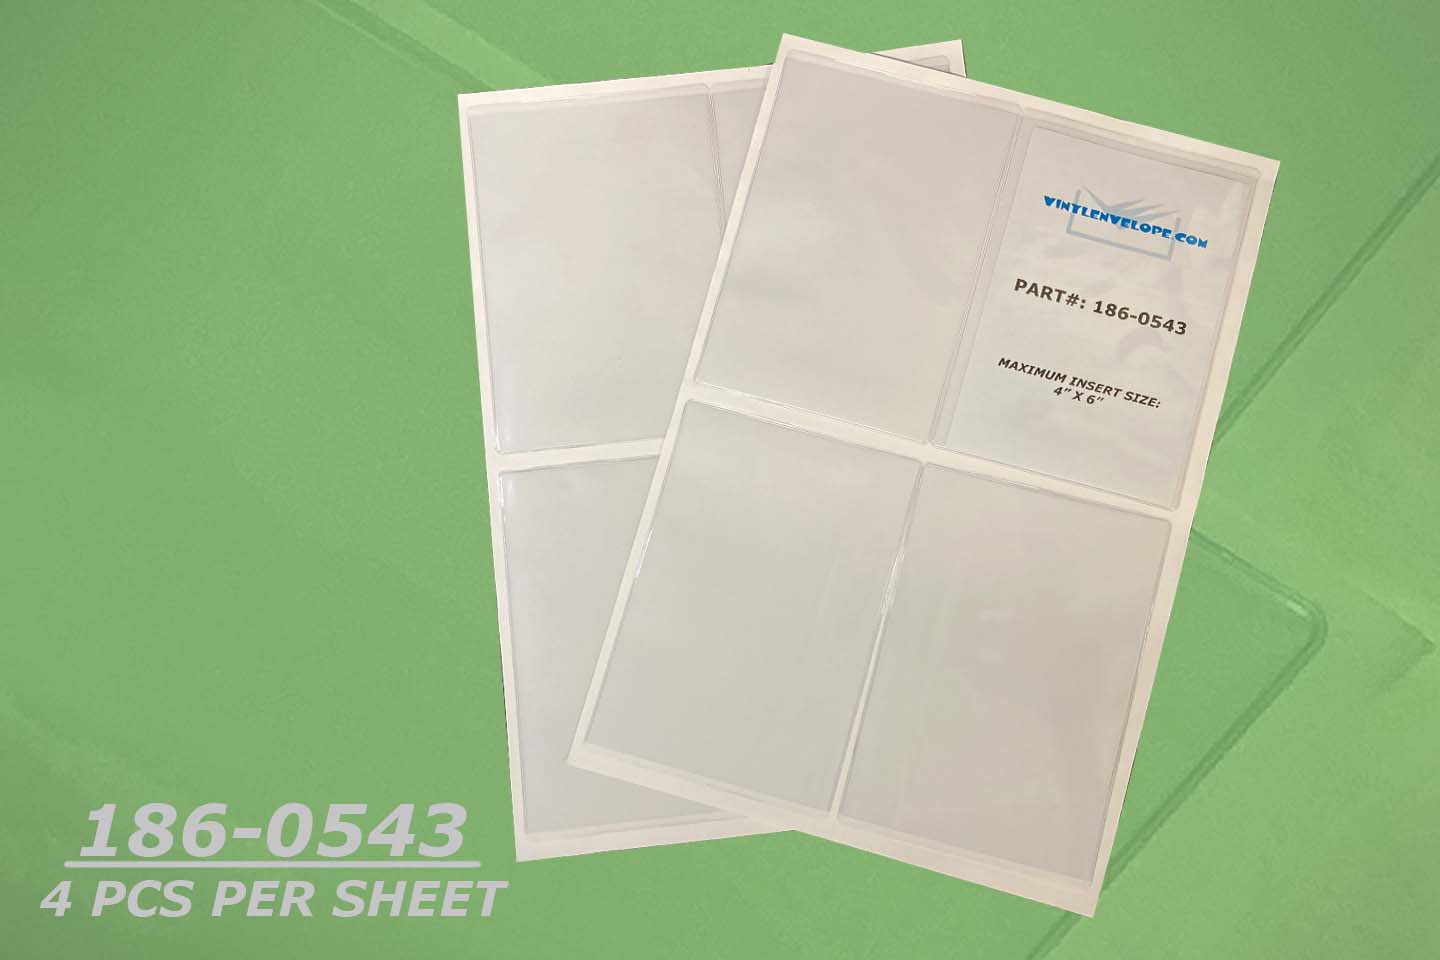 4 X 6" Short-side opening press-on envelope